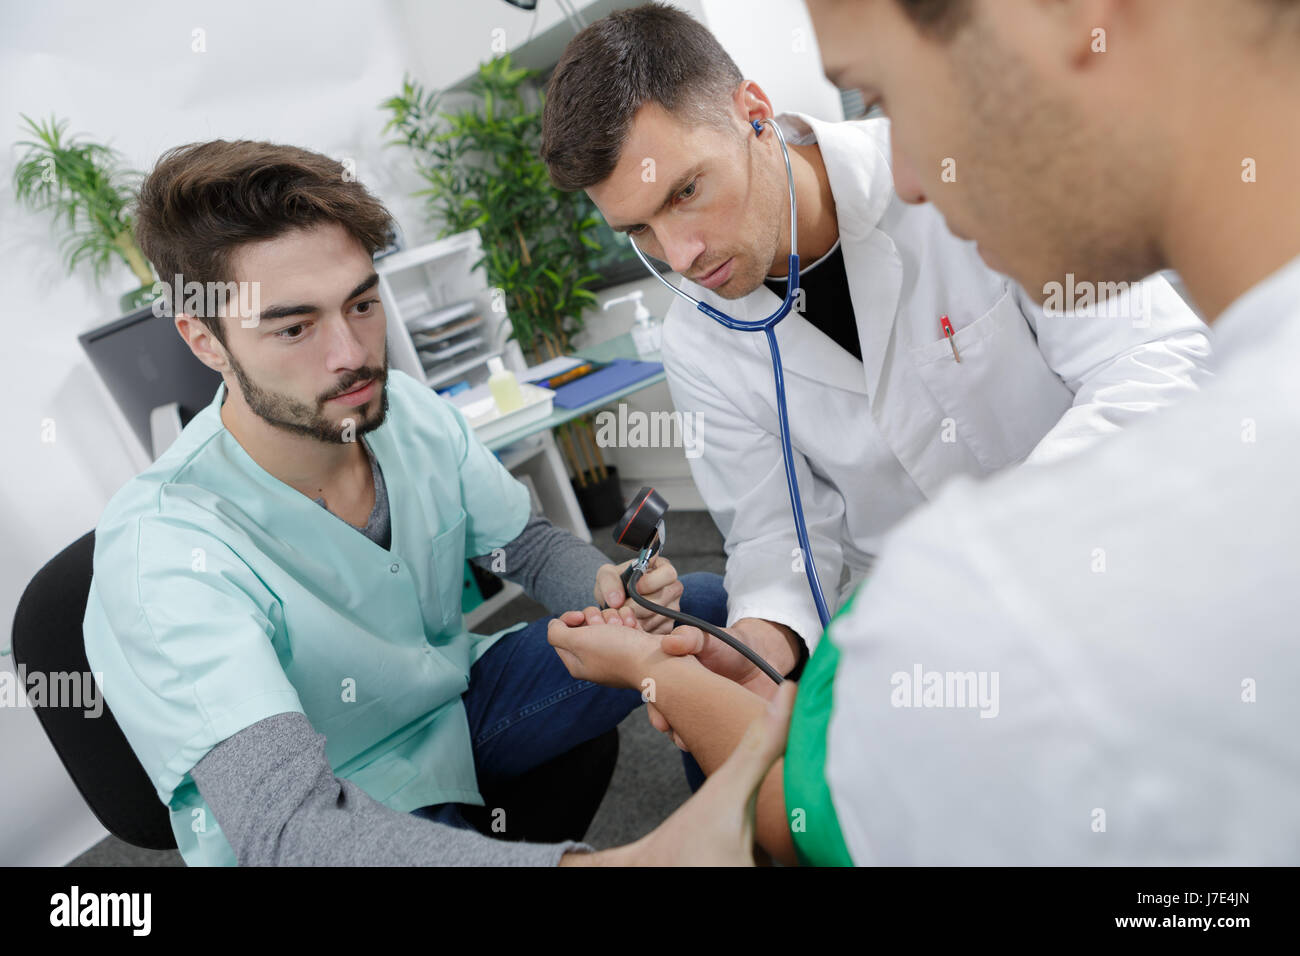 Student nurse taking patient's bloodpressure Stock Photo